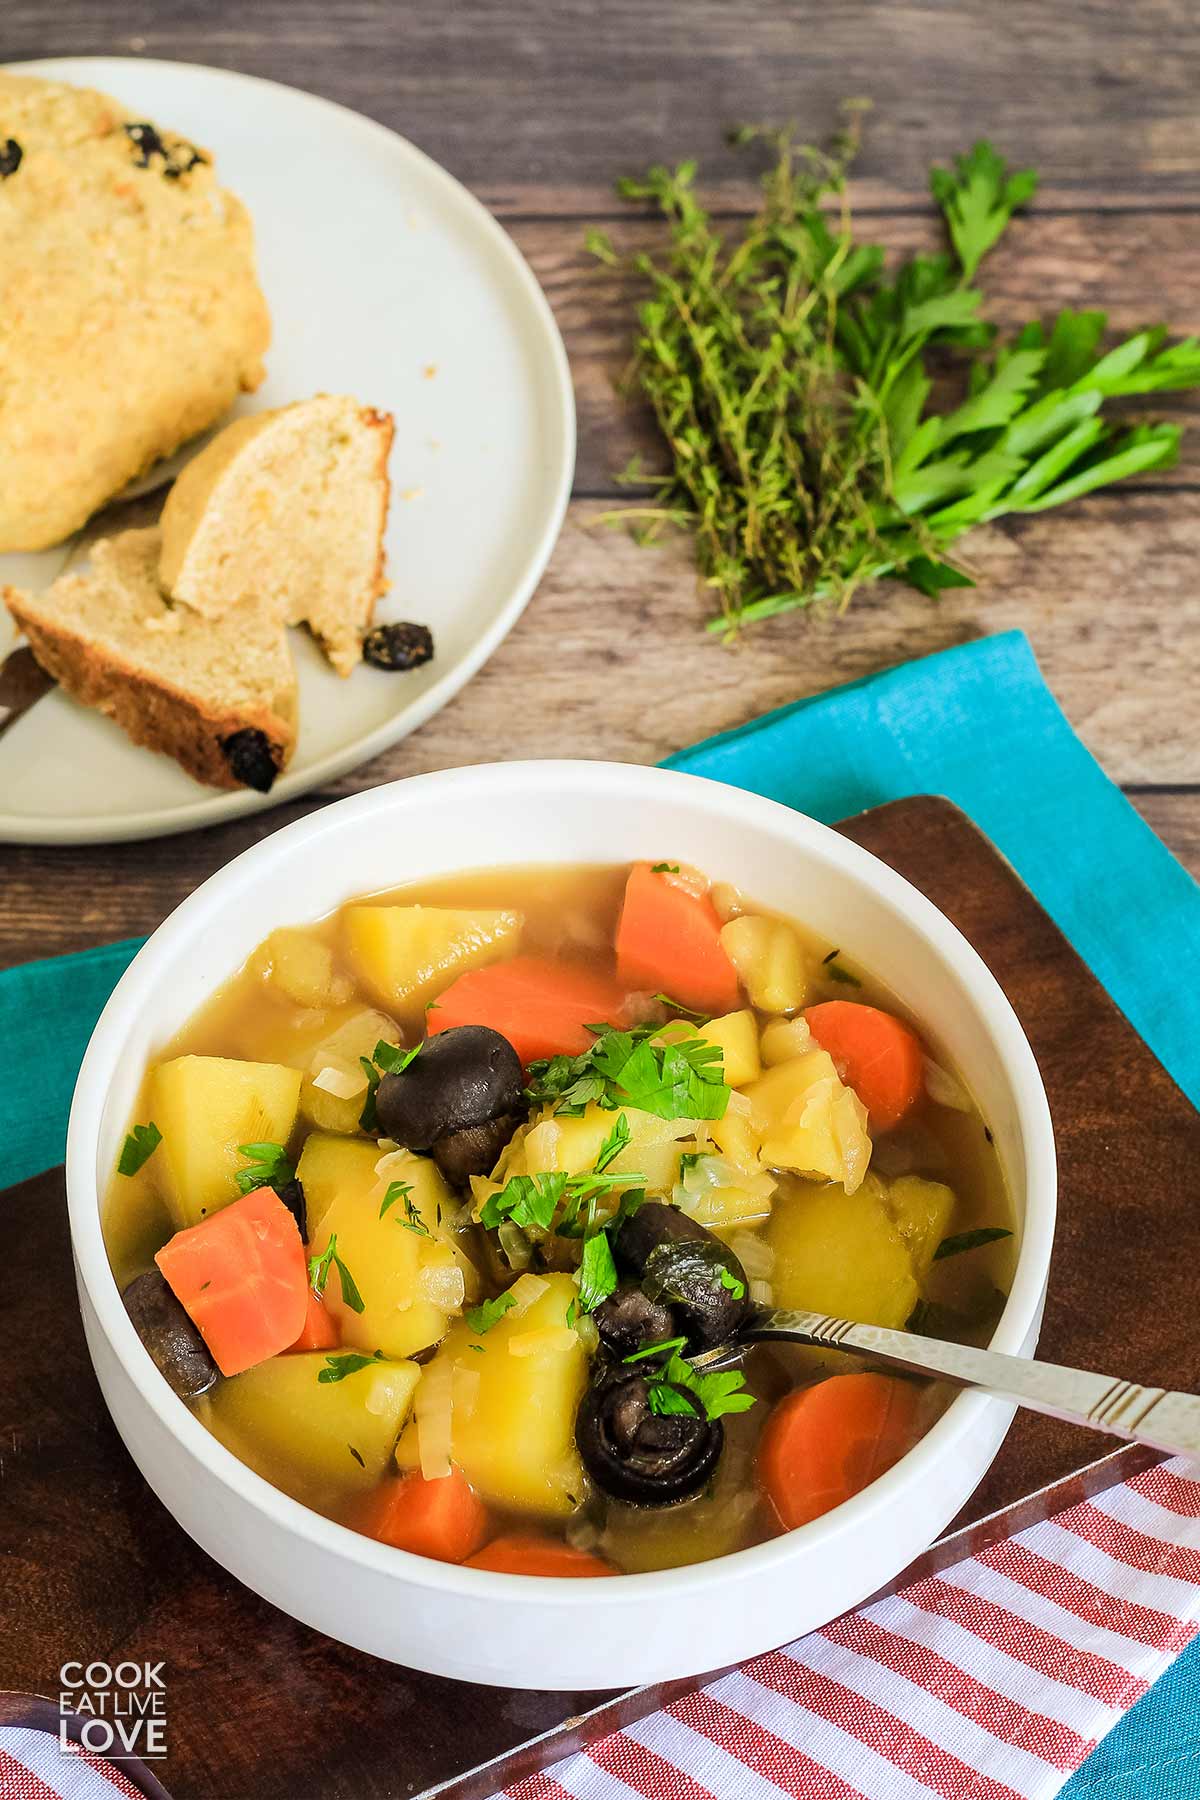 Bowl of vegan Irish stew on table with spoon